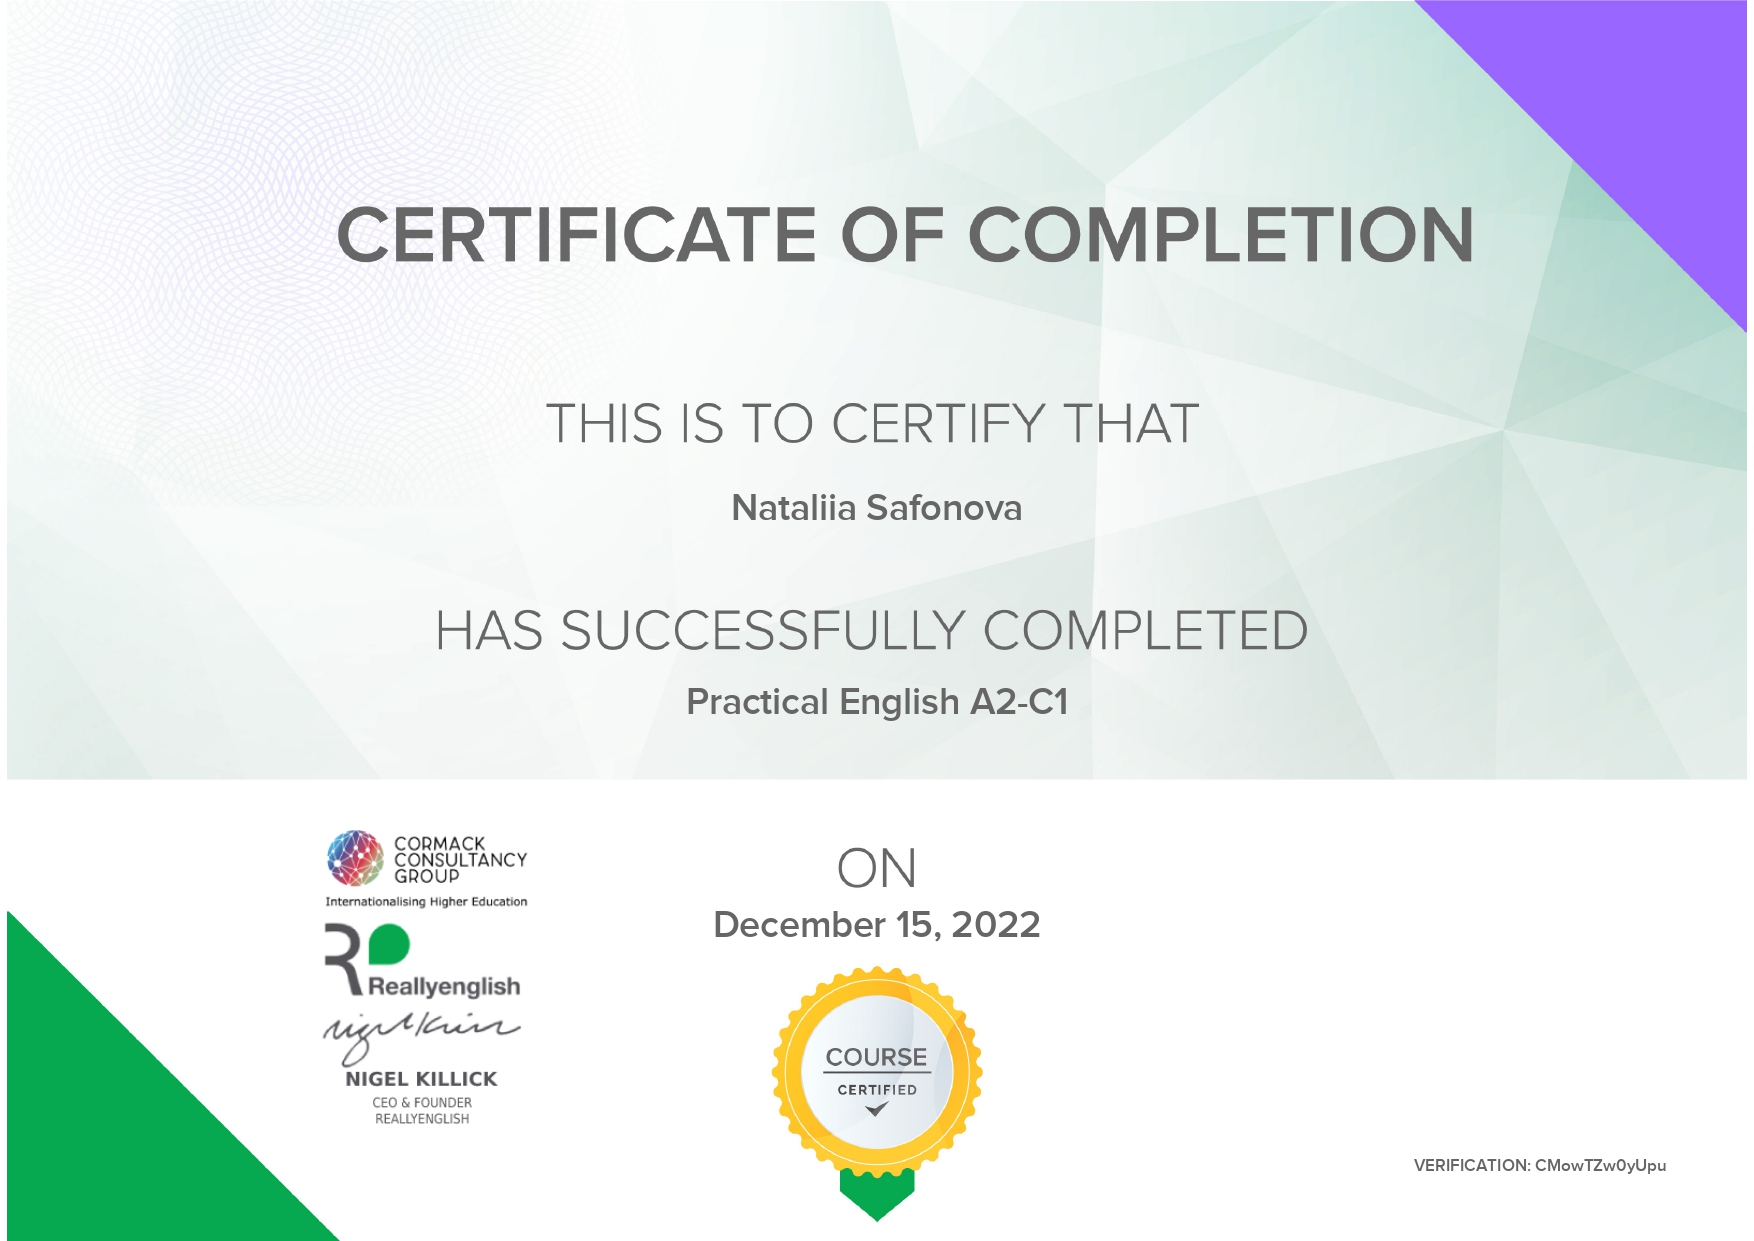 certificate-CMowTZw0yUpu (2)_page-0001.jpg